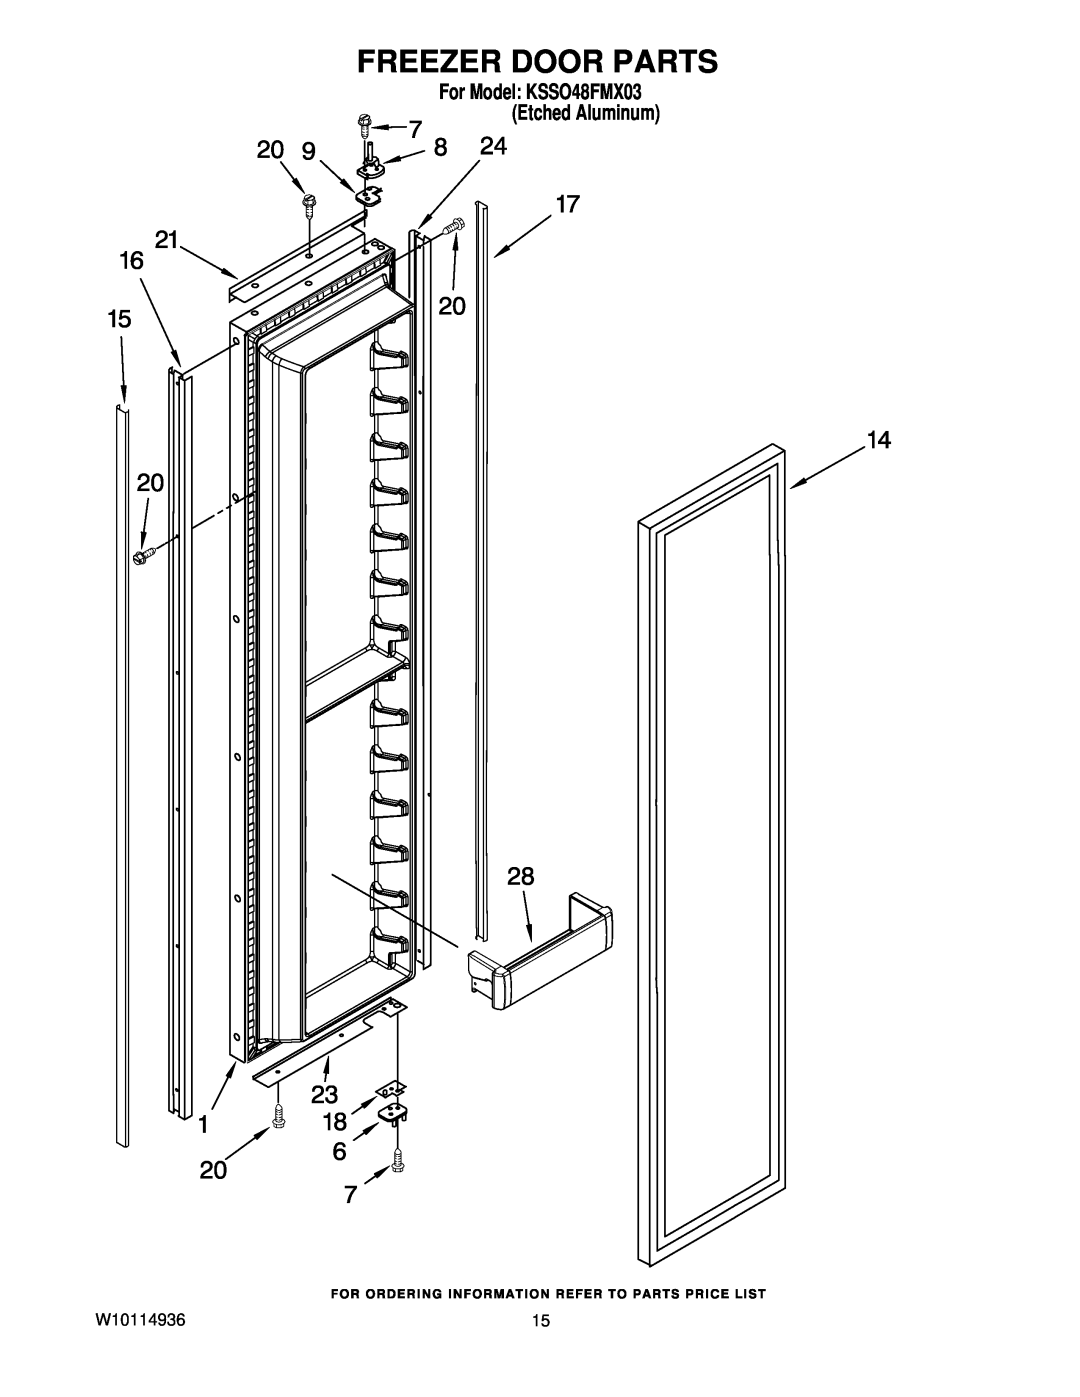 KitchenAid manual Freezer Door Parts, W10114936, For Model KSSO48FMX03 Etched Aluminum 